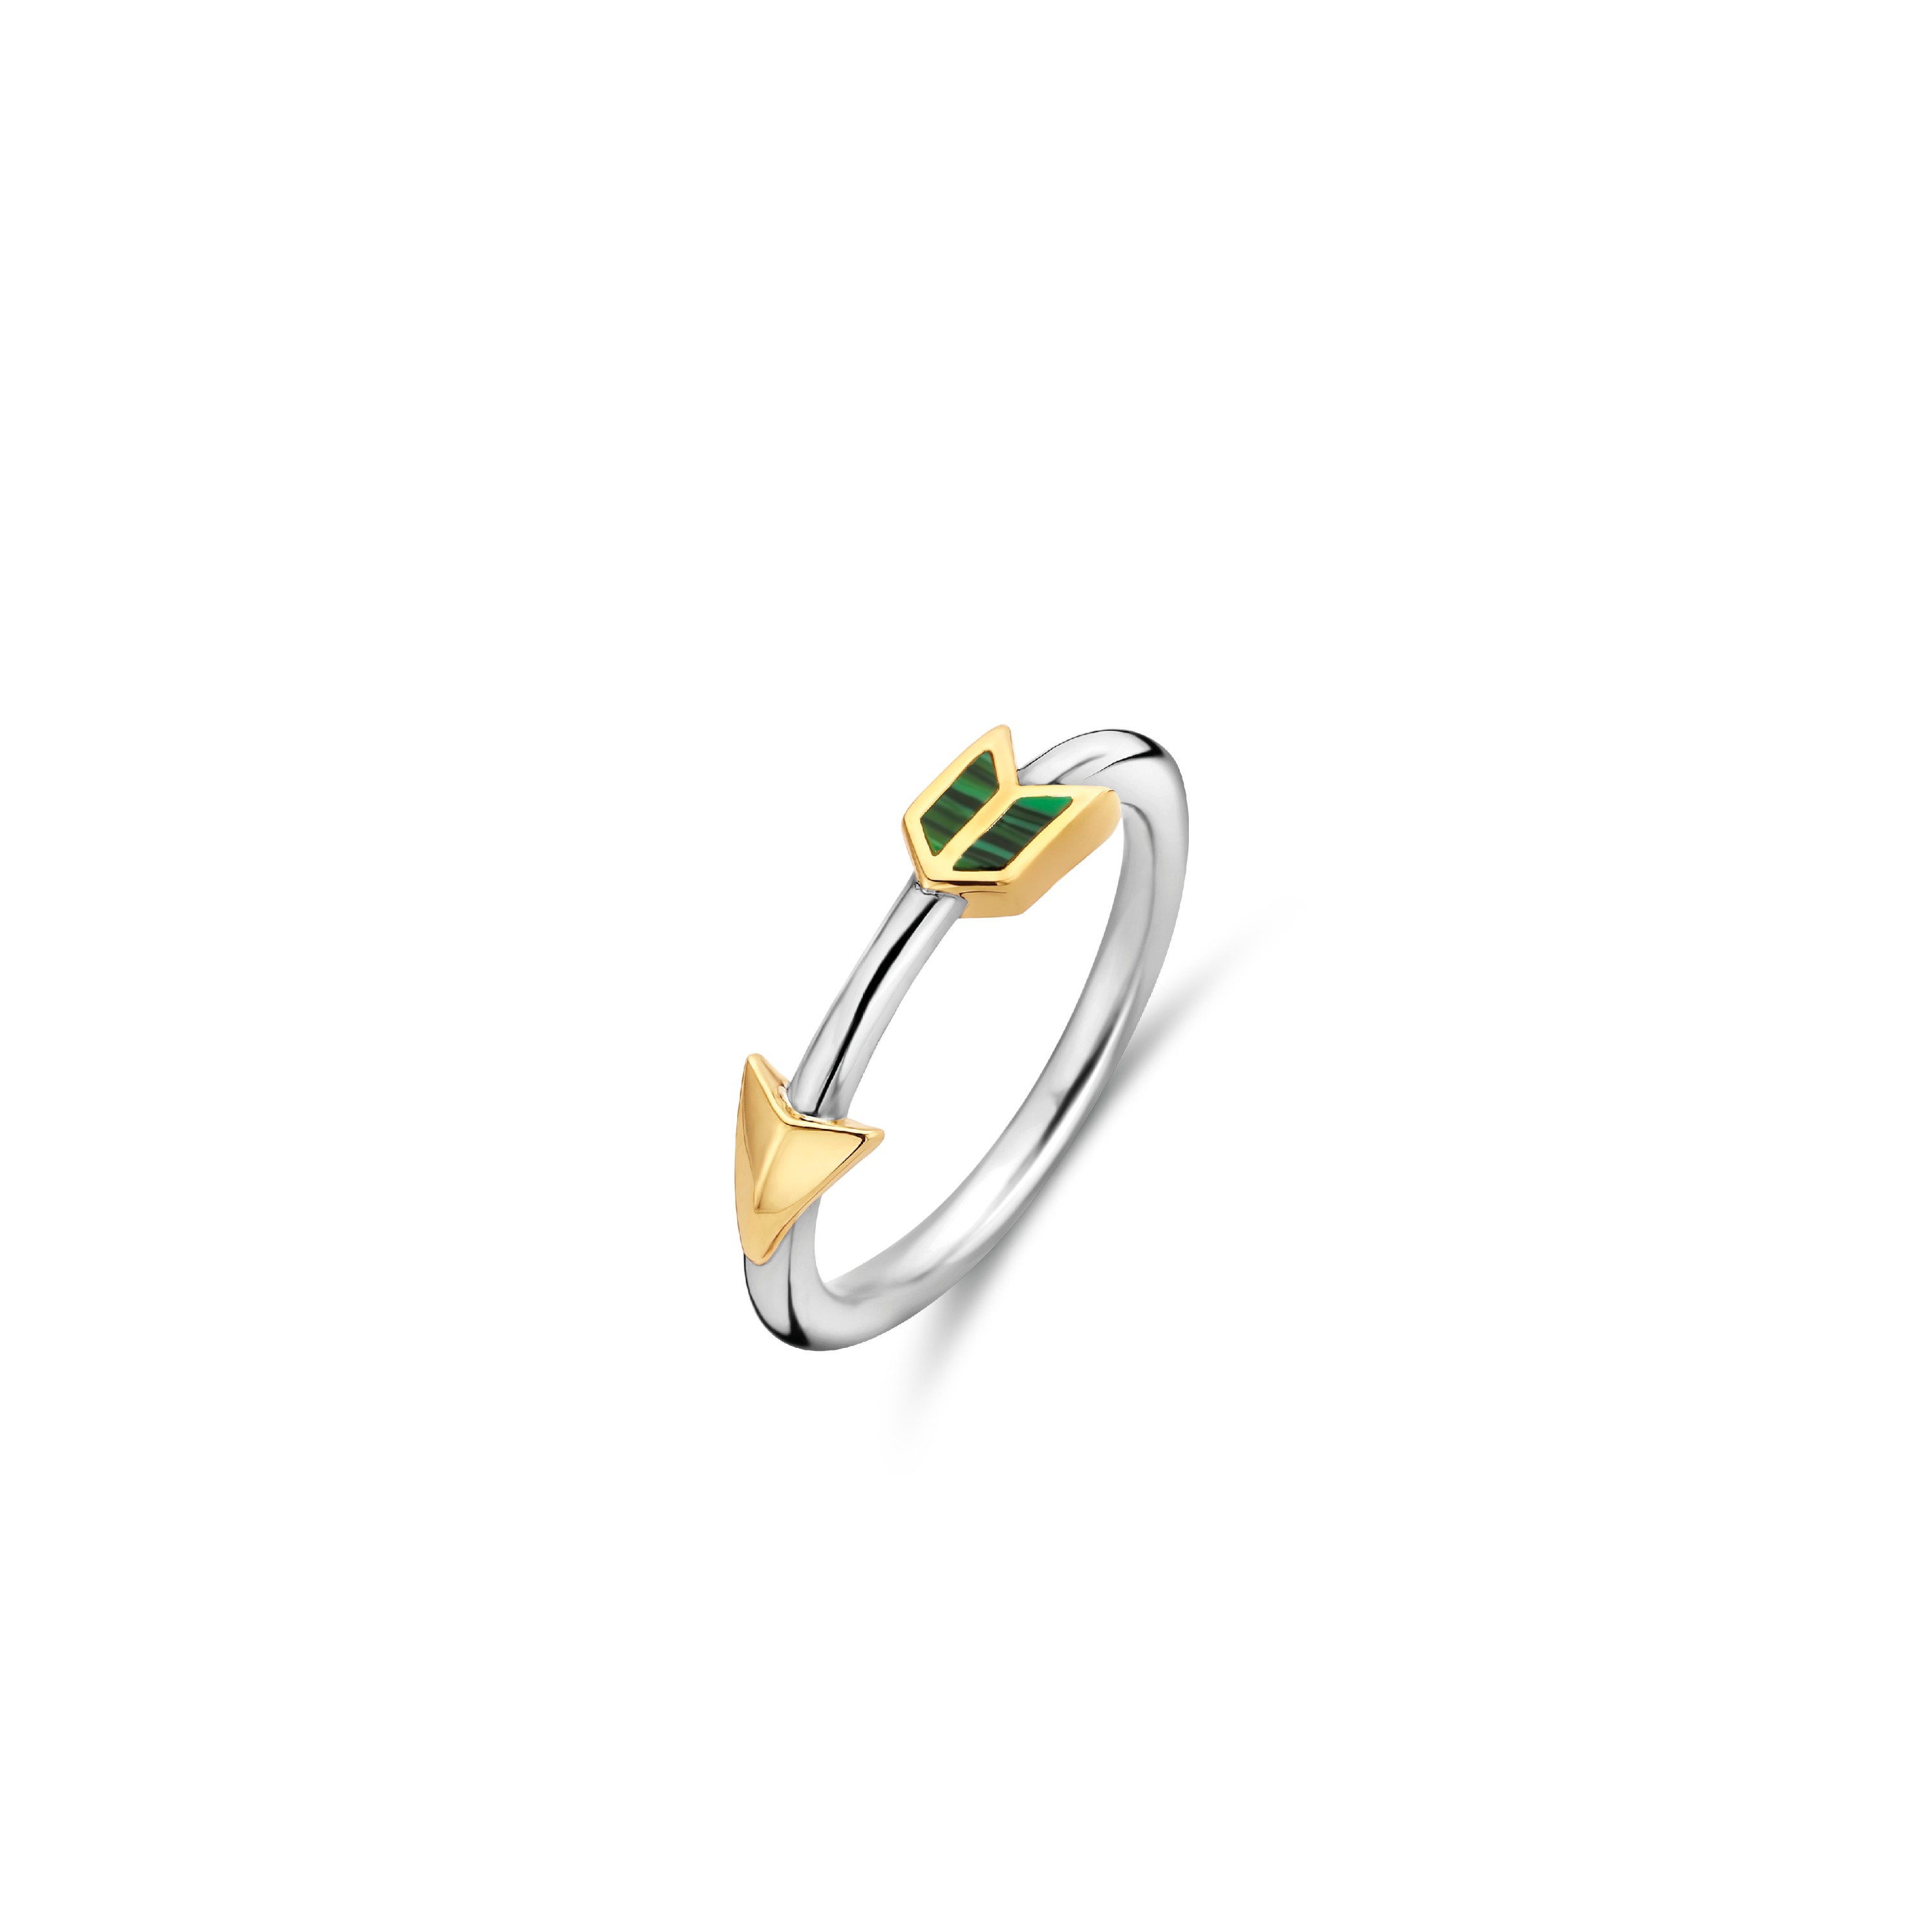 TI SENTO - Milano Ring 12198MA Gala Jewelers Inc. White Oak, PA